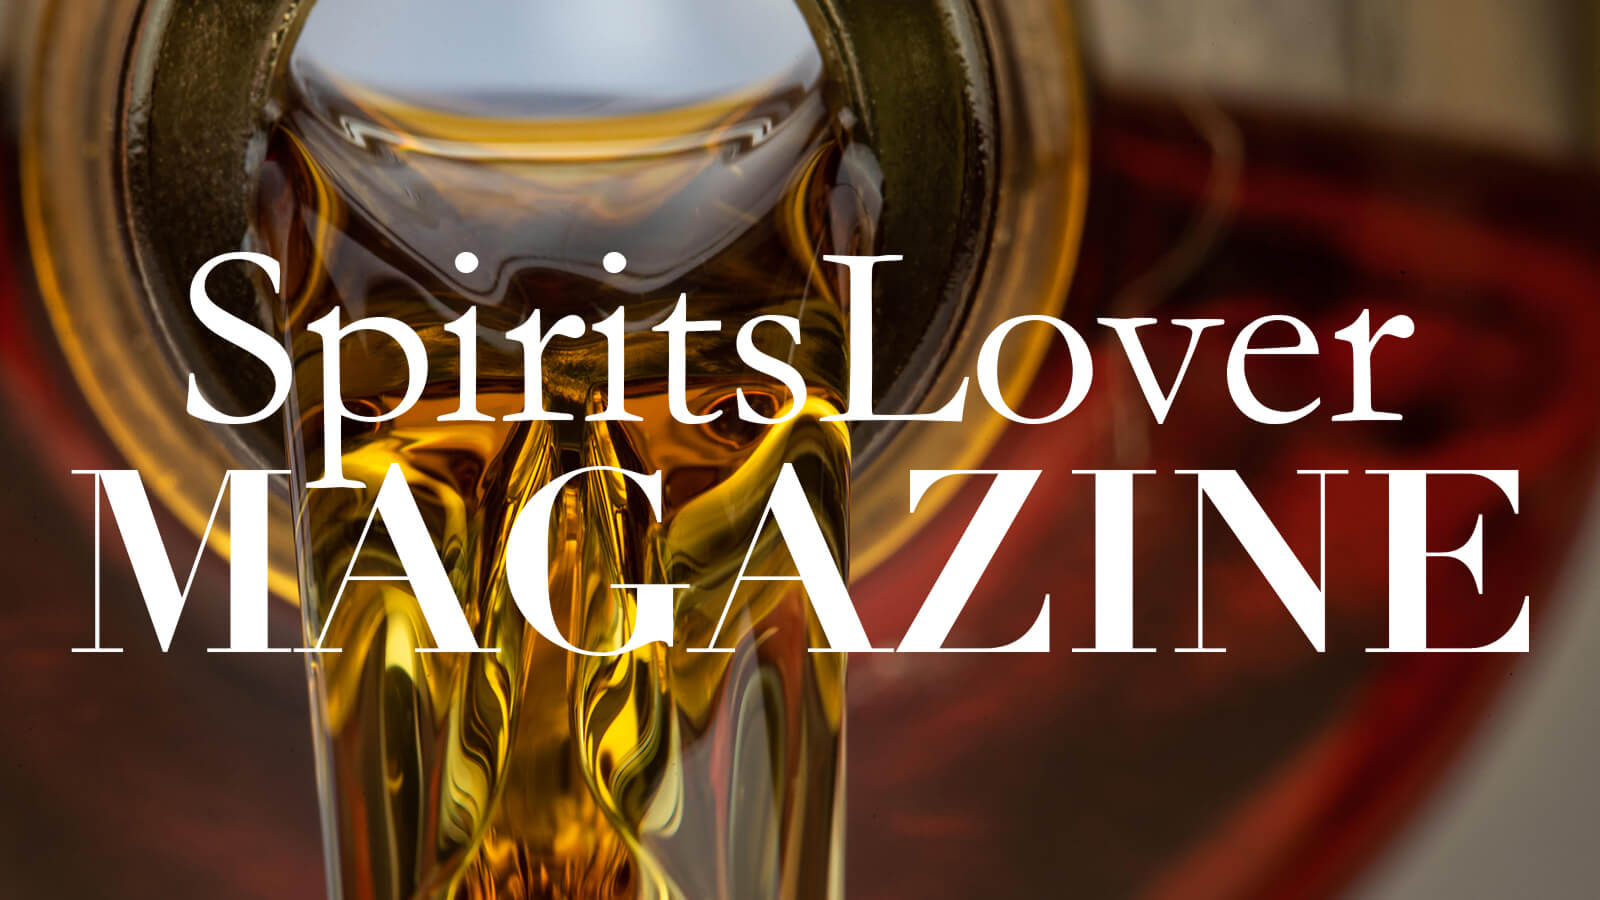 Spirits Lover Magazine contact us